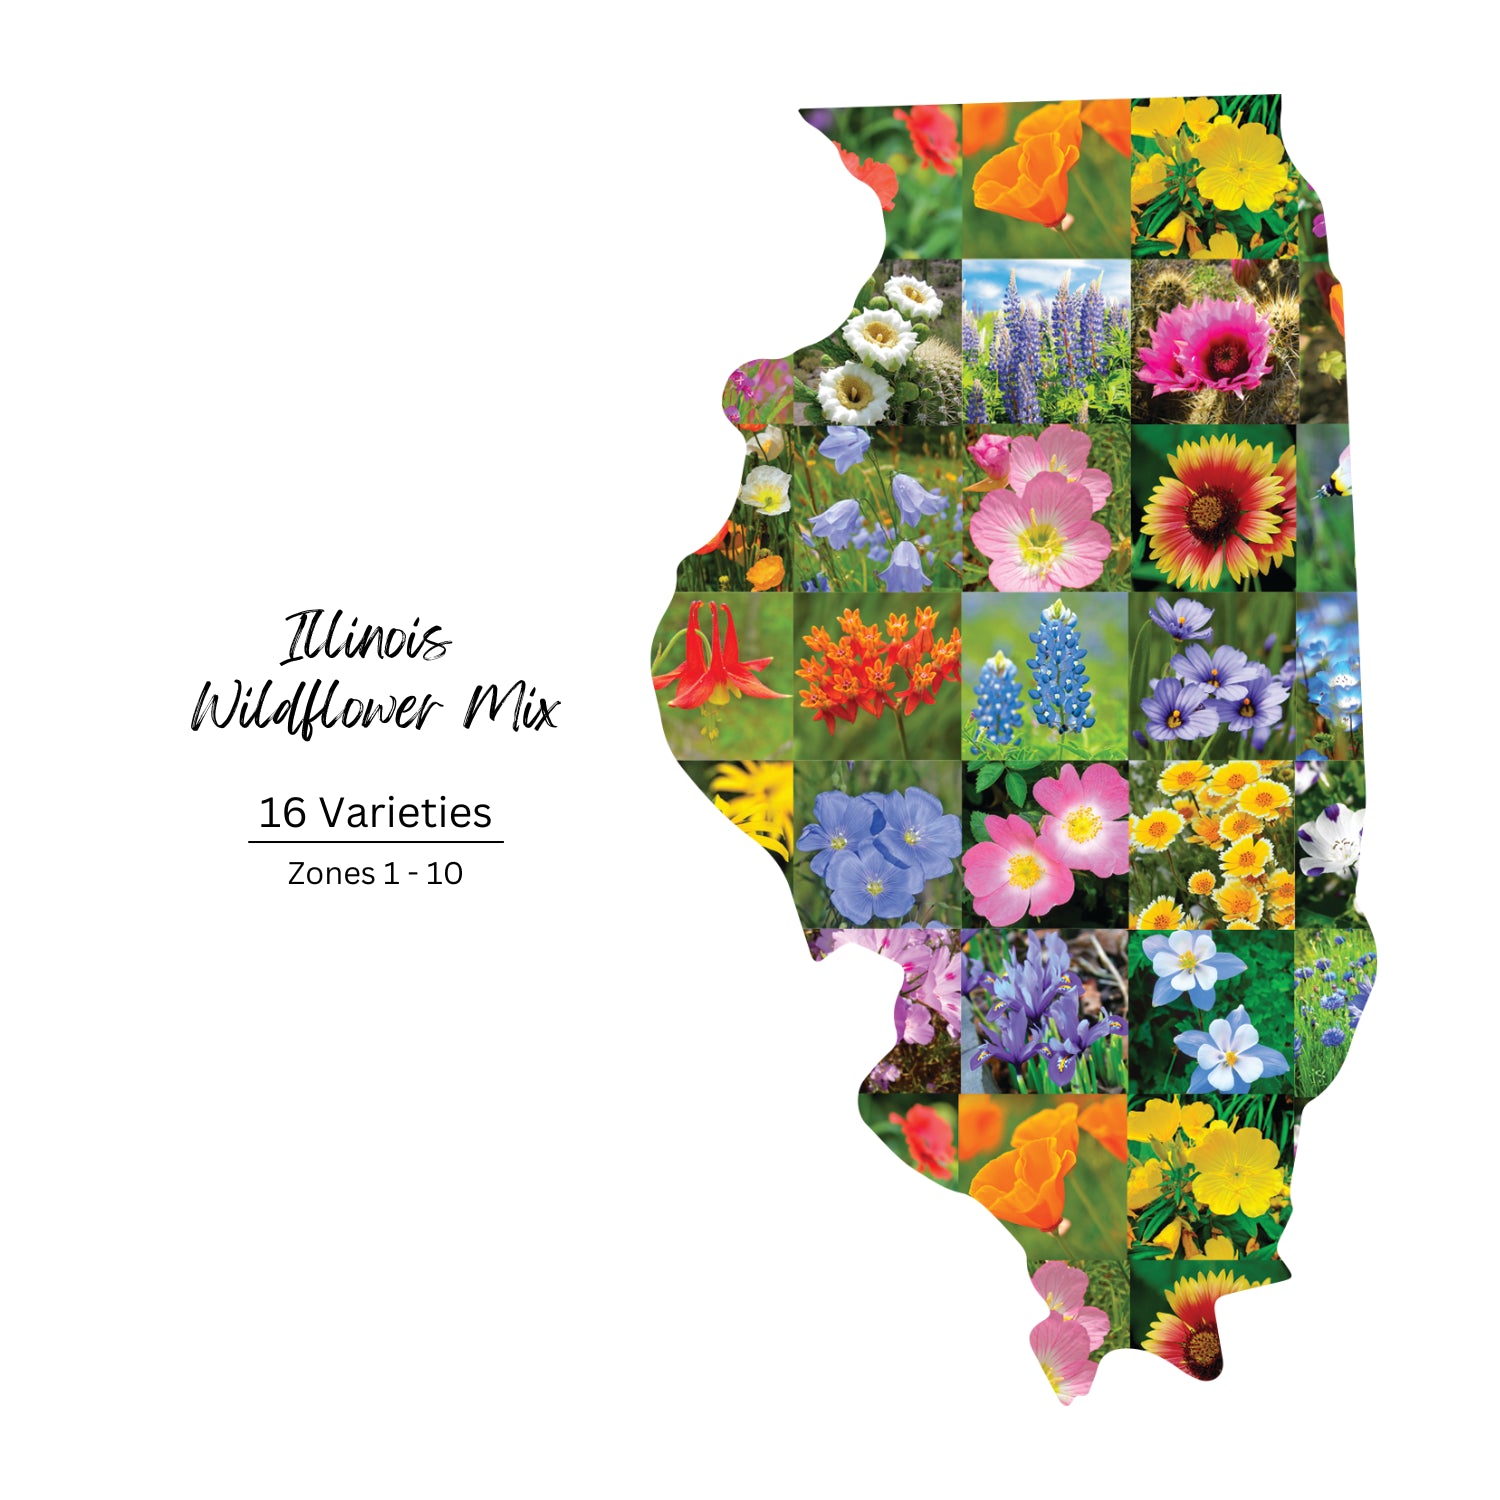 Illinois wildflowers